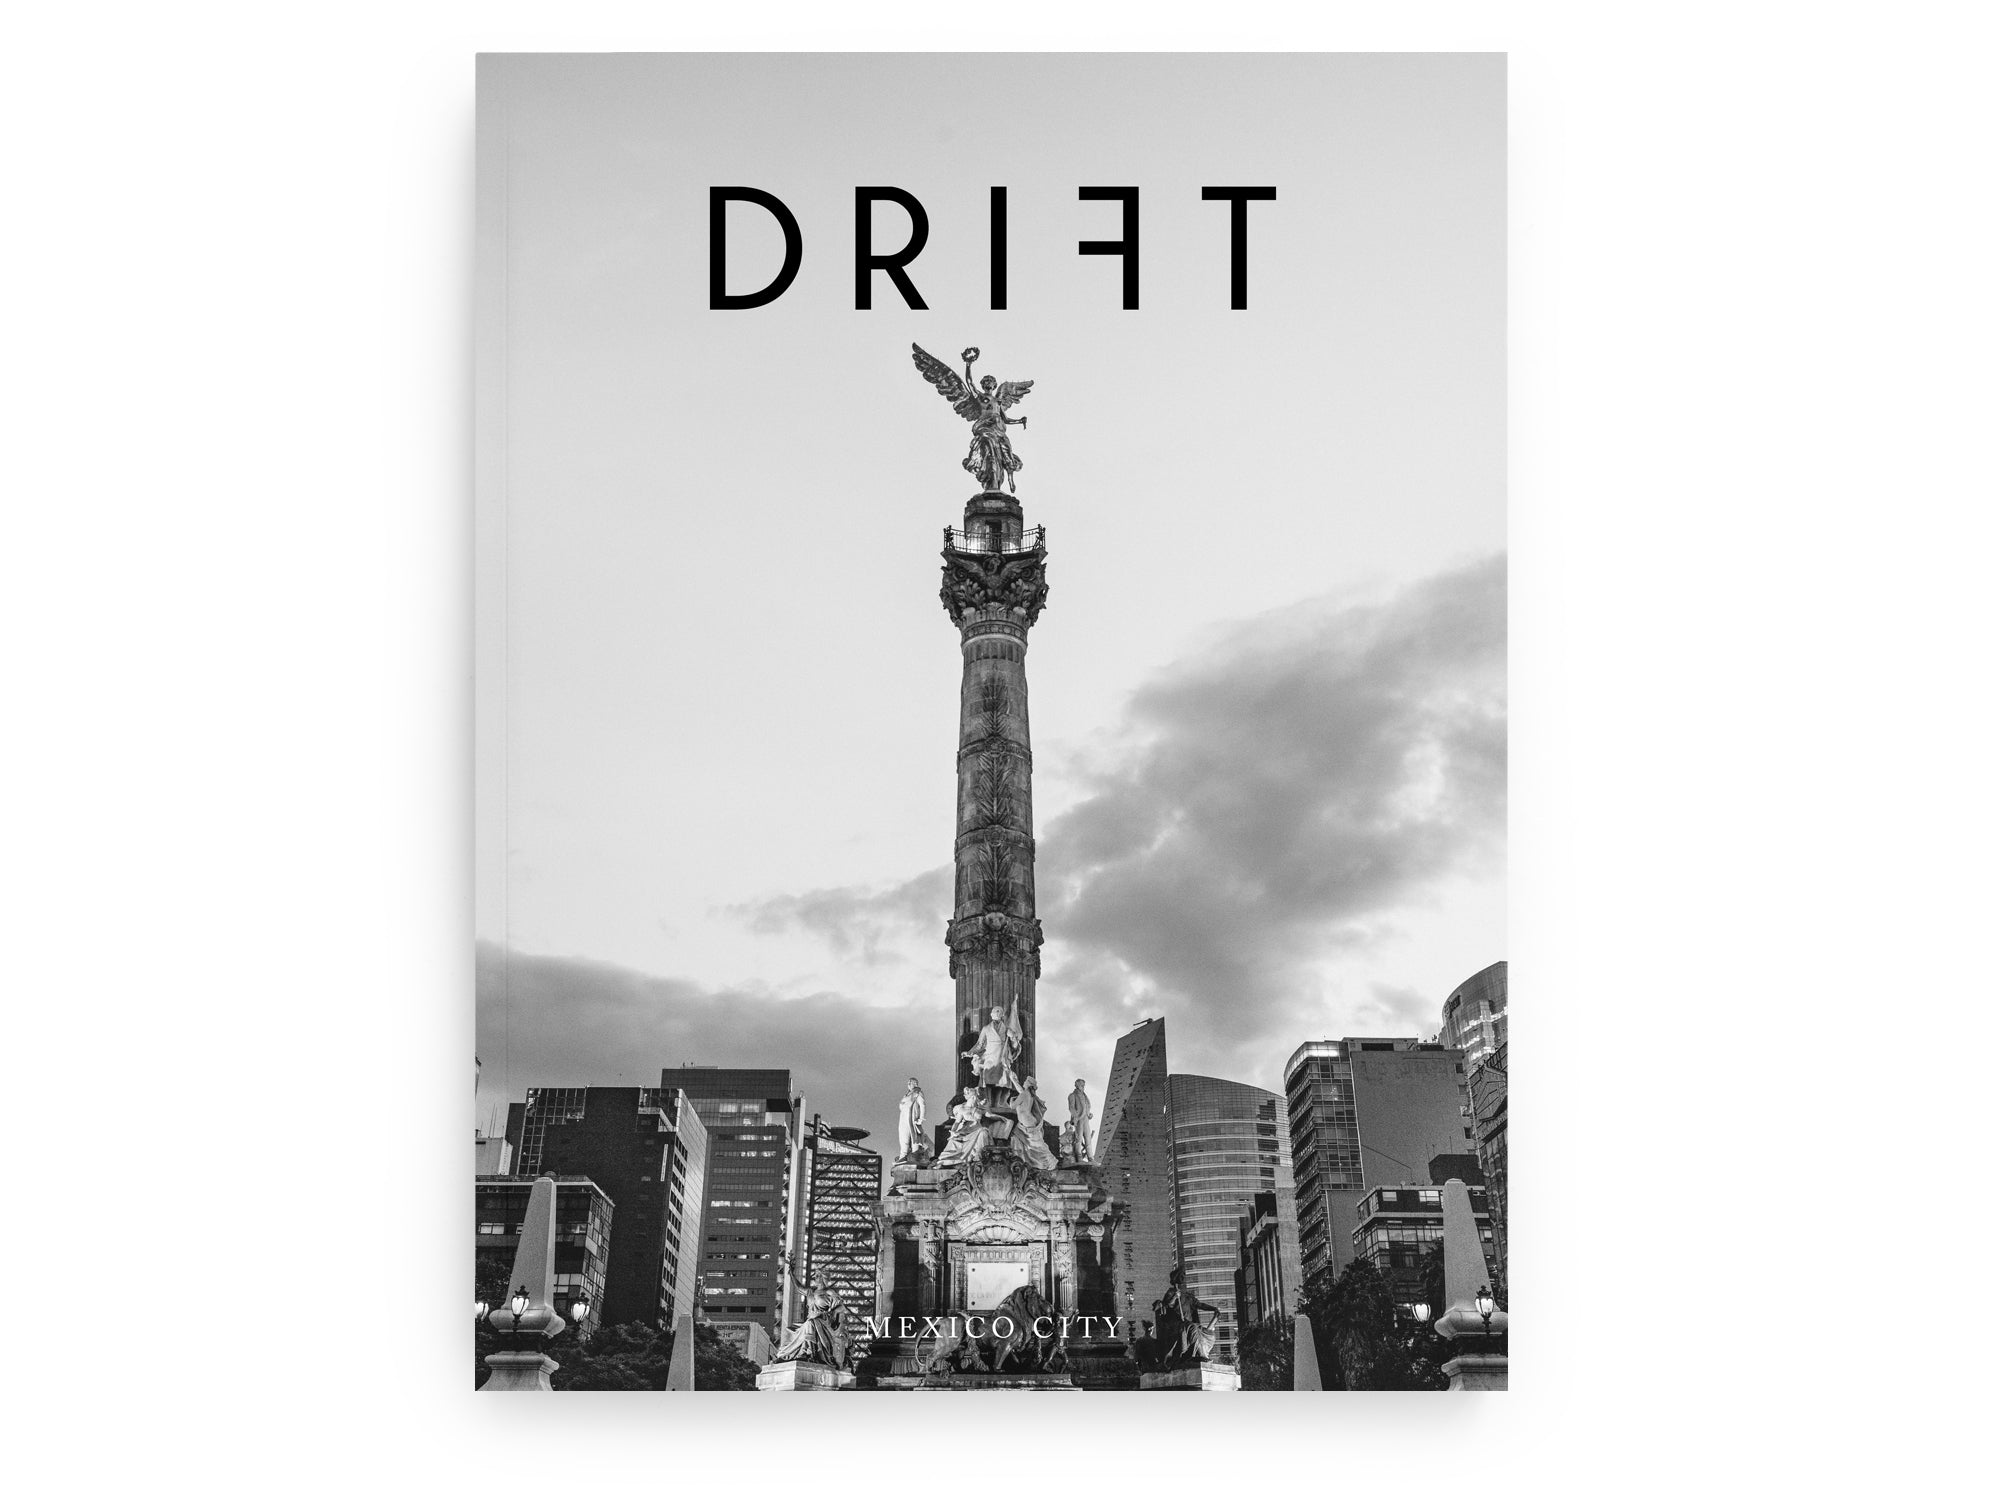 Drift Magazine - Mexico City Edition